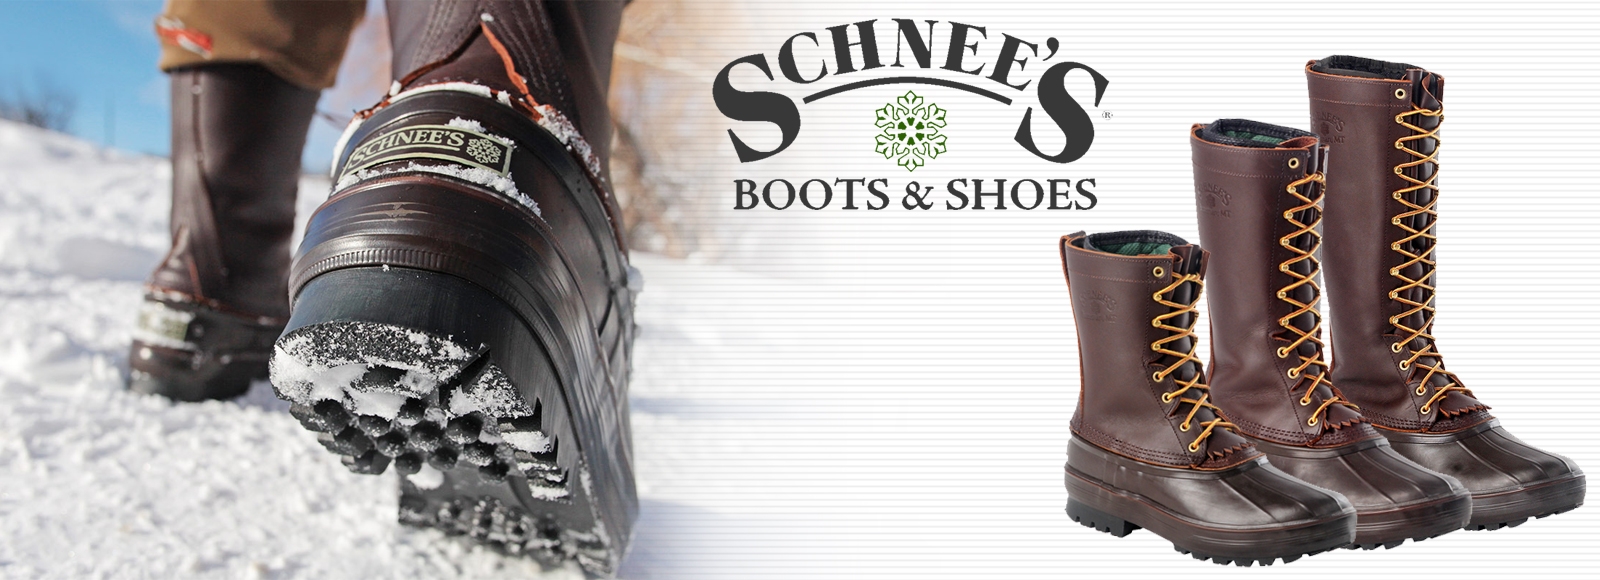 schnee's boots sale